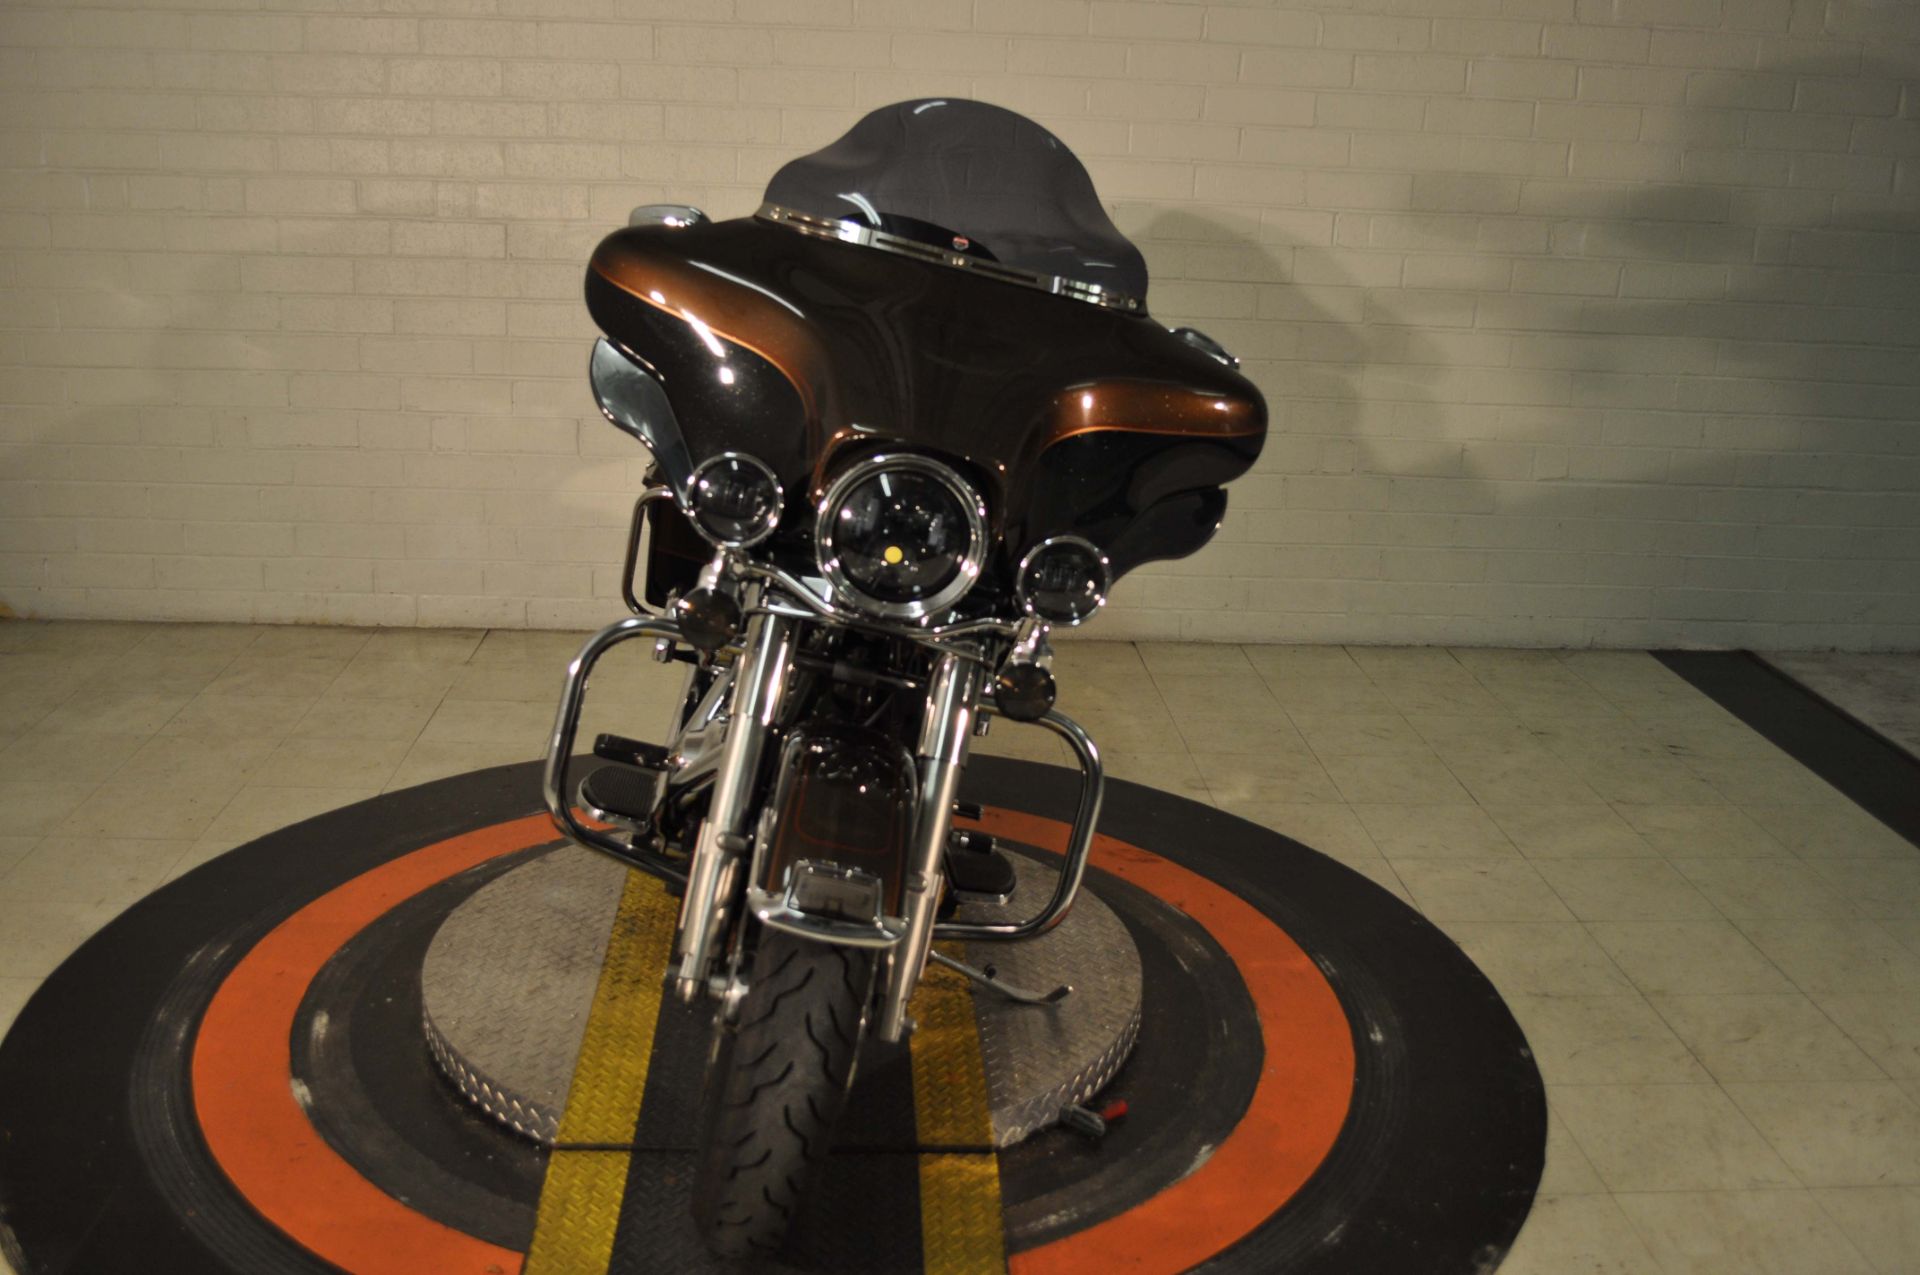 2013 Harley-Davidson Electra Glide® Ultra Limited in Winston Salem, North Carolina - Photo 8